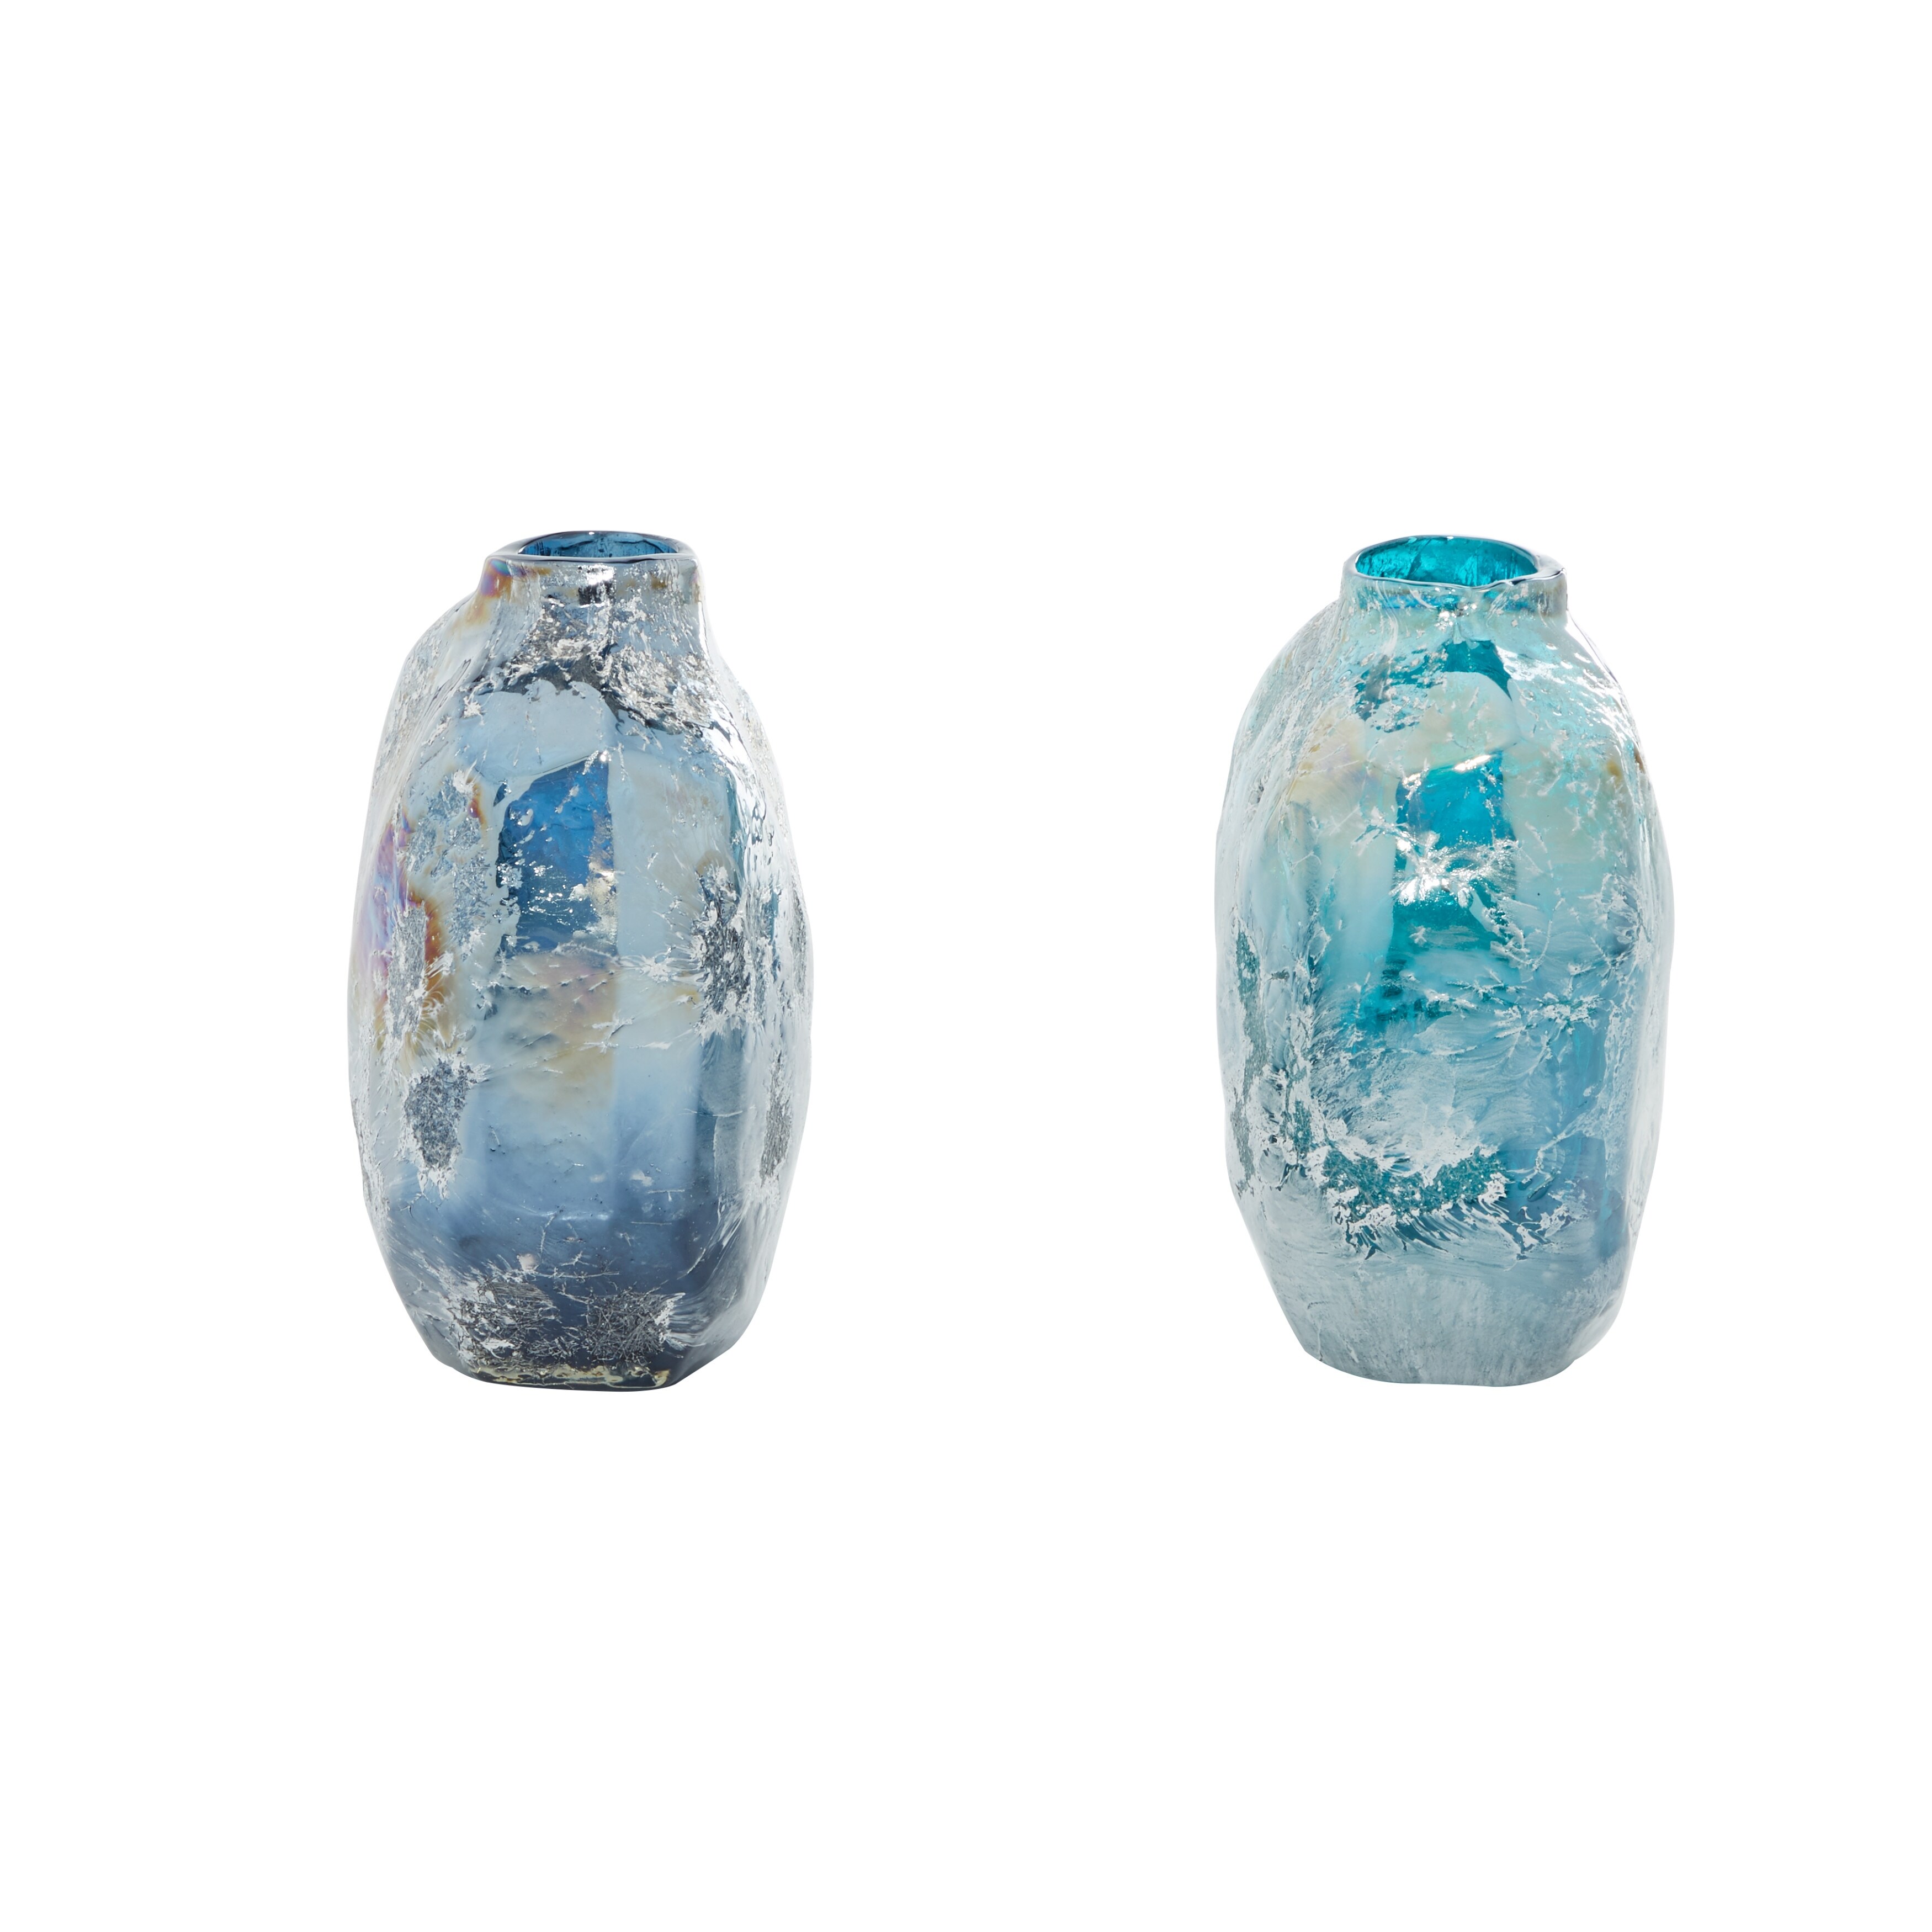 The Novogratz Blue Glass Handmade Blown Vase (Set of 2) - 8 x 5 x 9